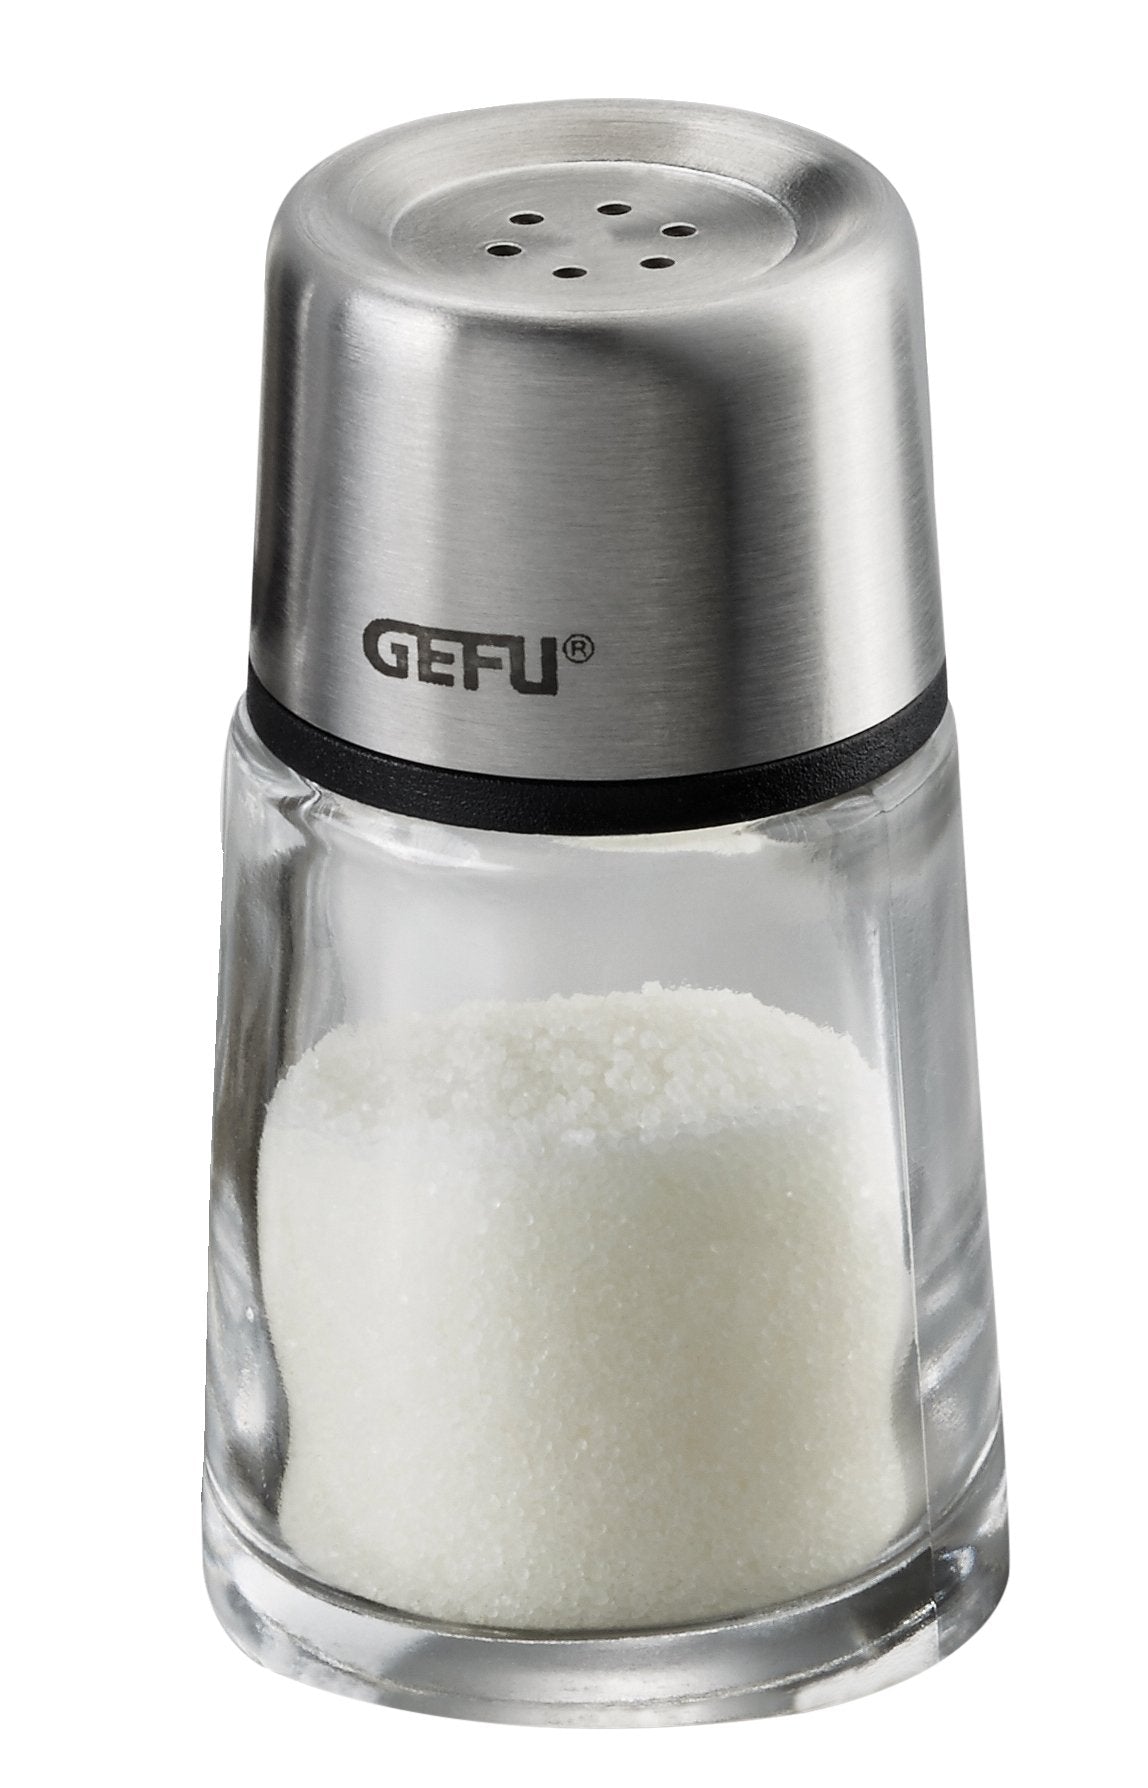 GEFU Salt / Pepper Shaker Brunch - Whole and All